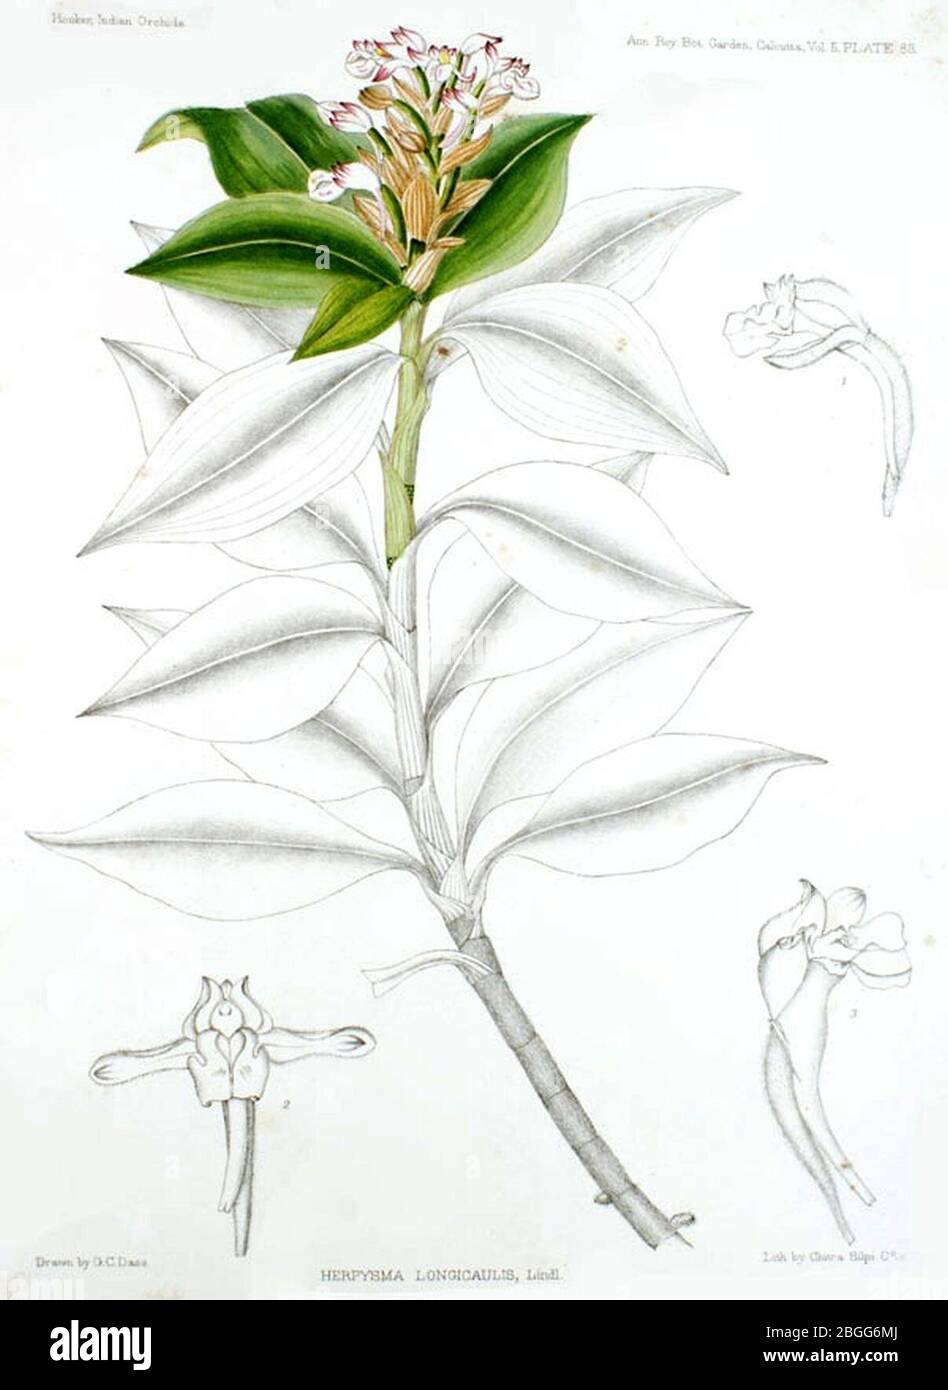 Herpysma longicaulis - A Century of Indian Orchids pl 88 (1895). Stock Photo